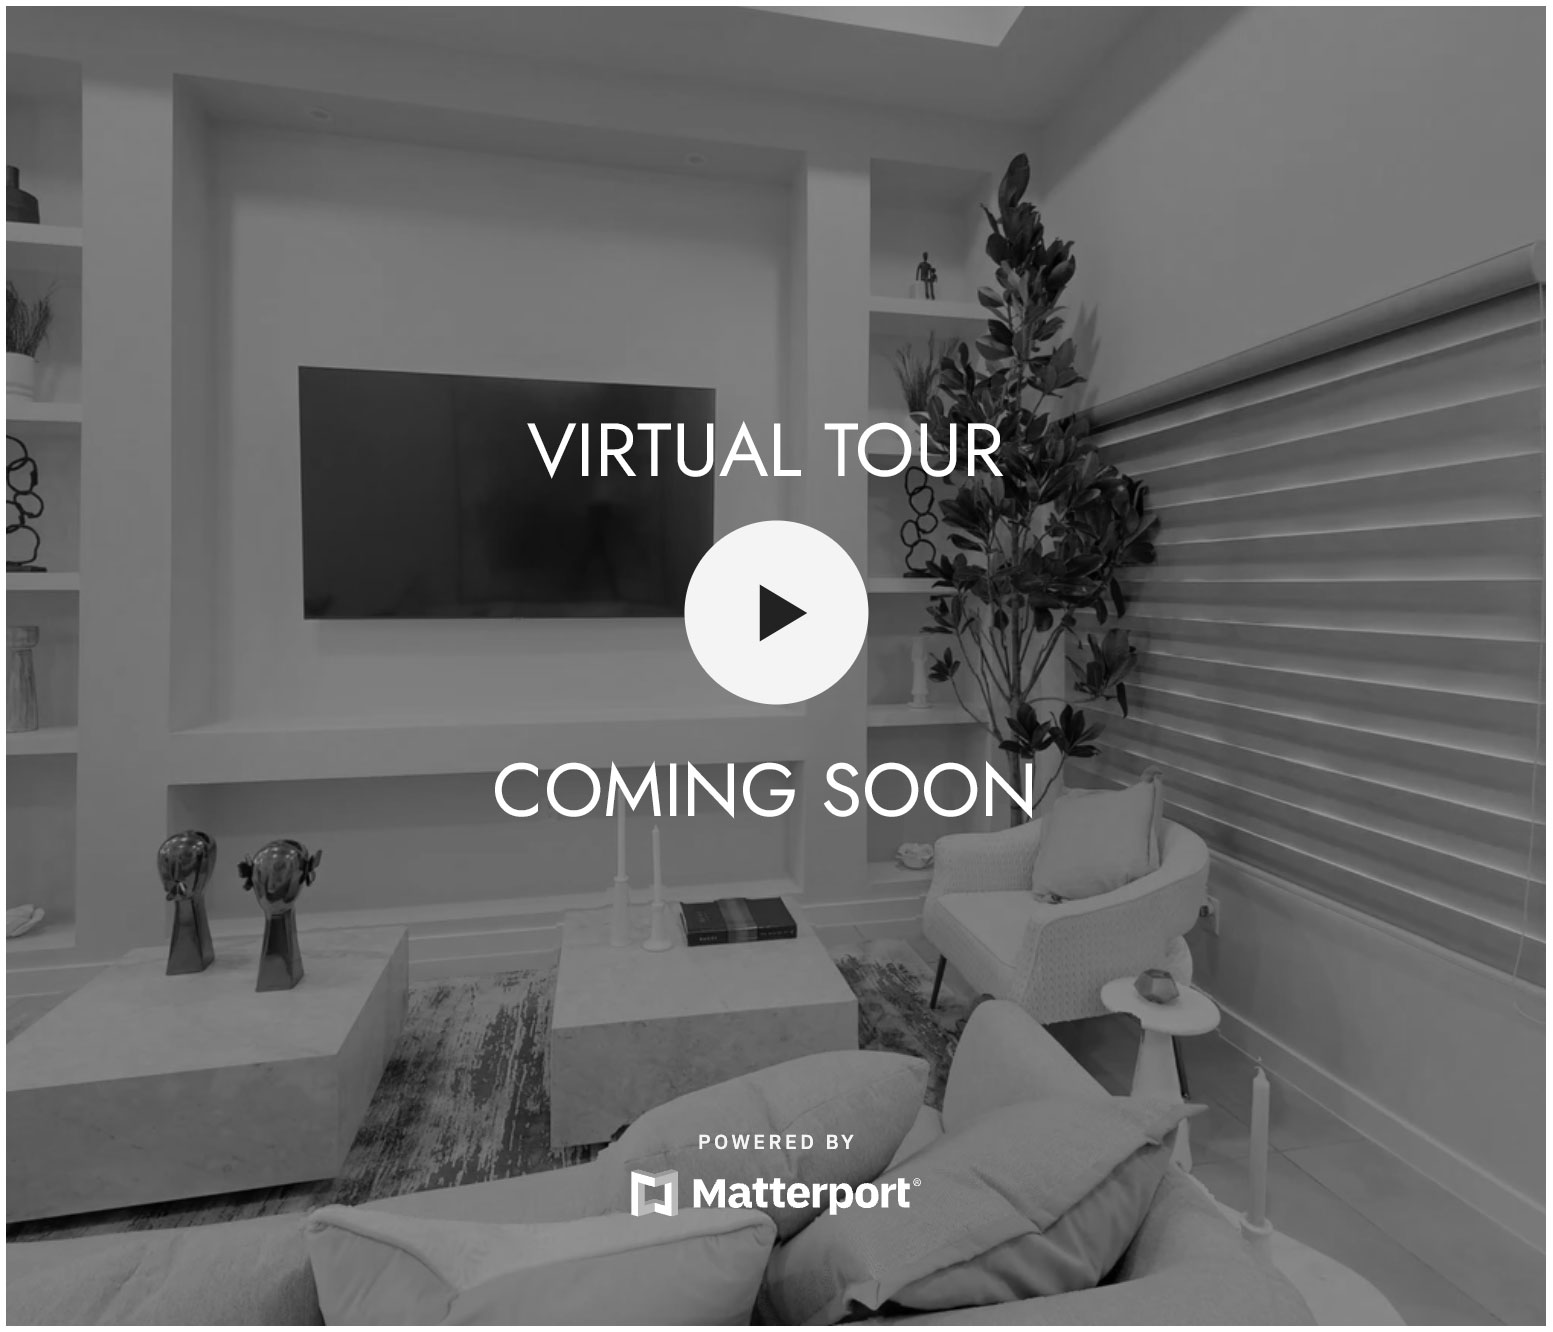 Virtual Tour Coming Soon